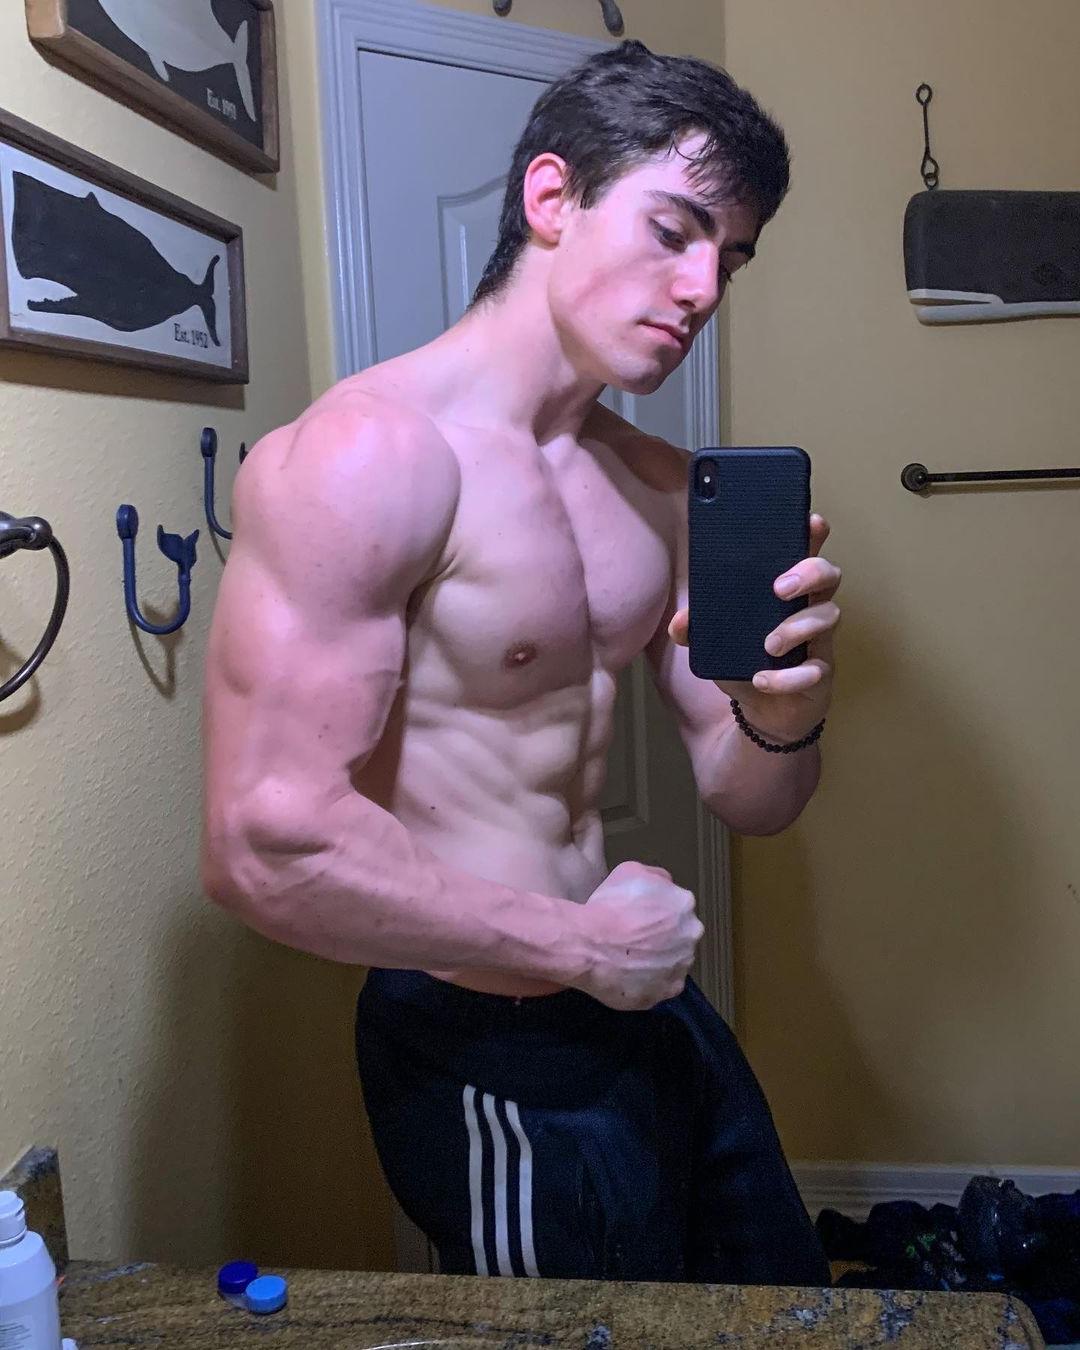 fit-shirtless-muscular-teen-bro-sean-stahl-college-athlete-ripped-abs-bathroom-selfie